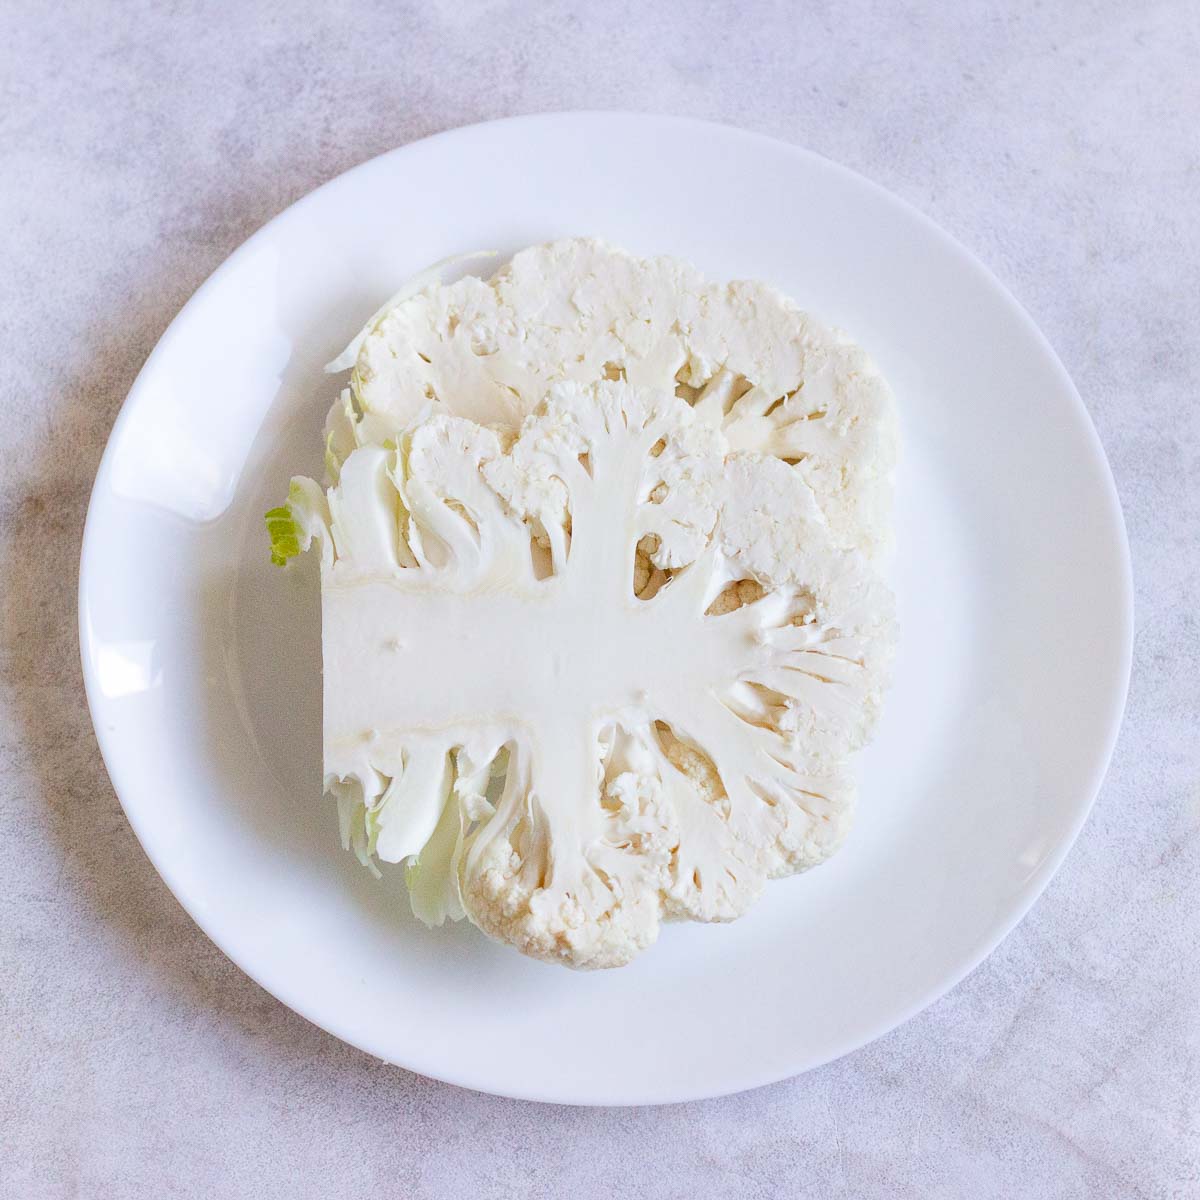 Cauliflower sliced into a steak shape